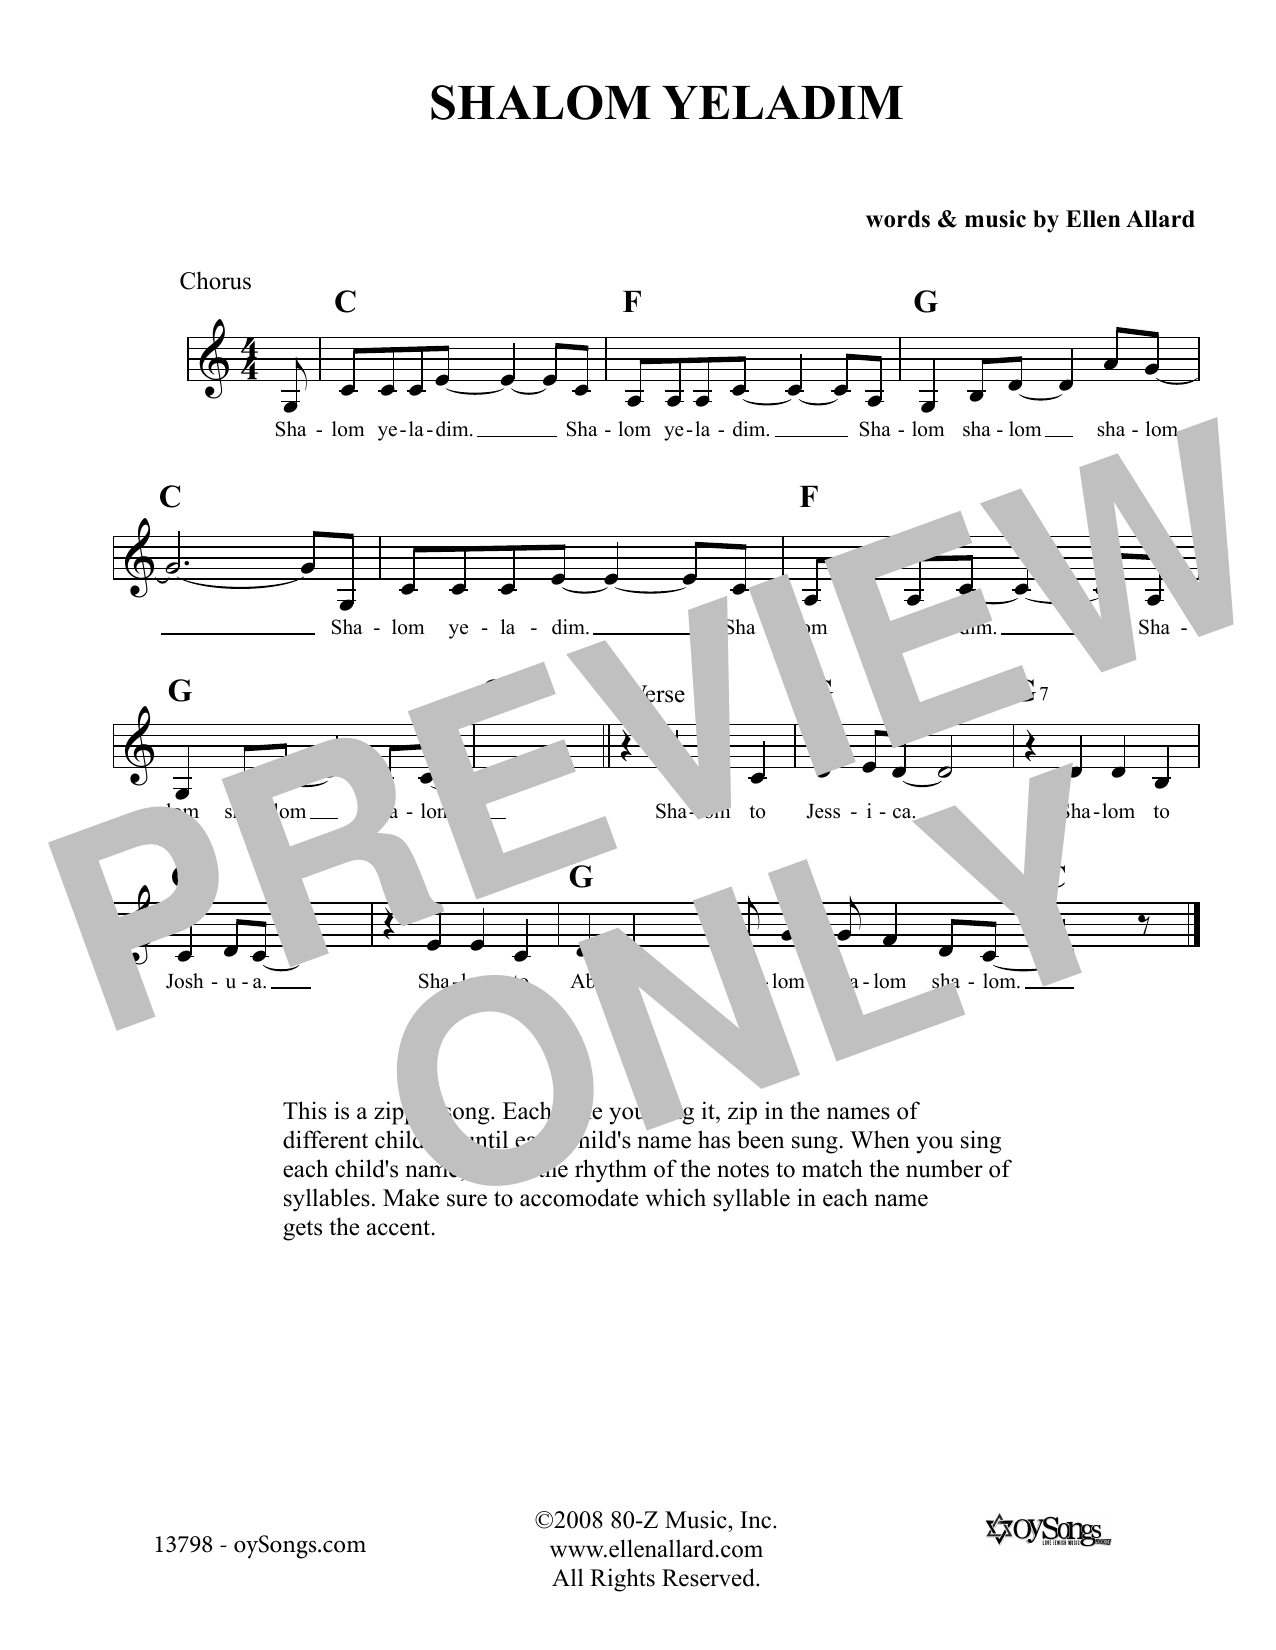 Ellen Allard Shalom Yeladim Sheet Music Notes & Chords for Melody Line, Lyrics & Chords - Download or Print PDF